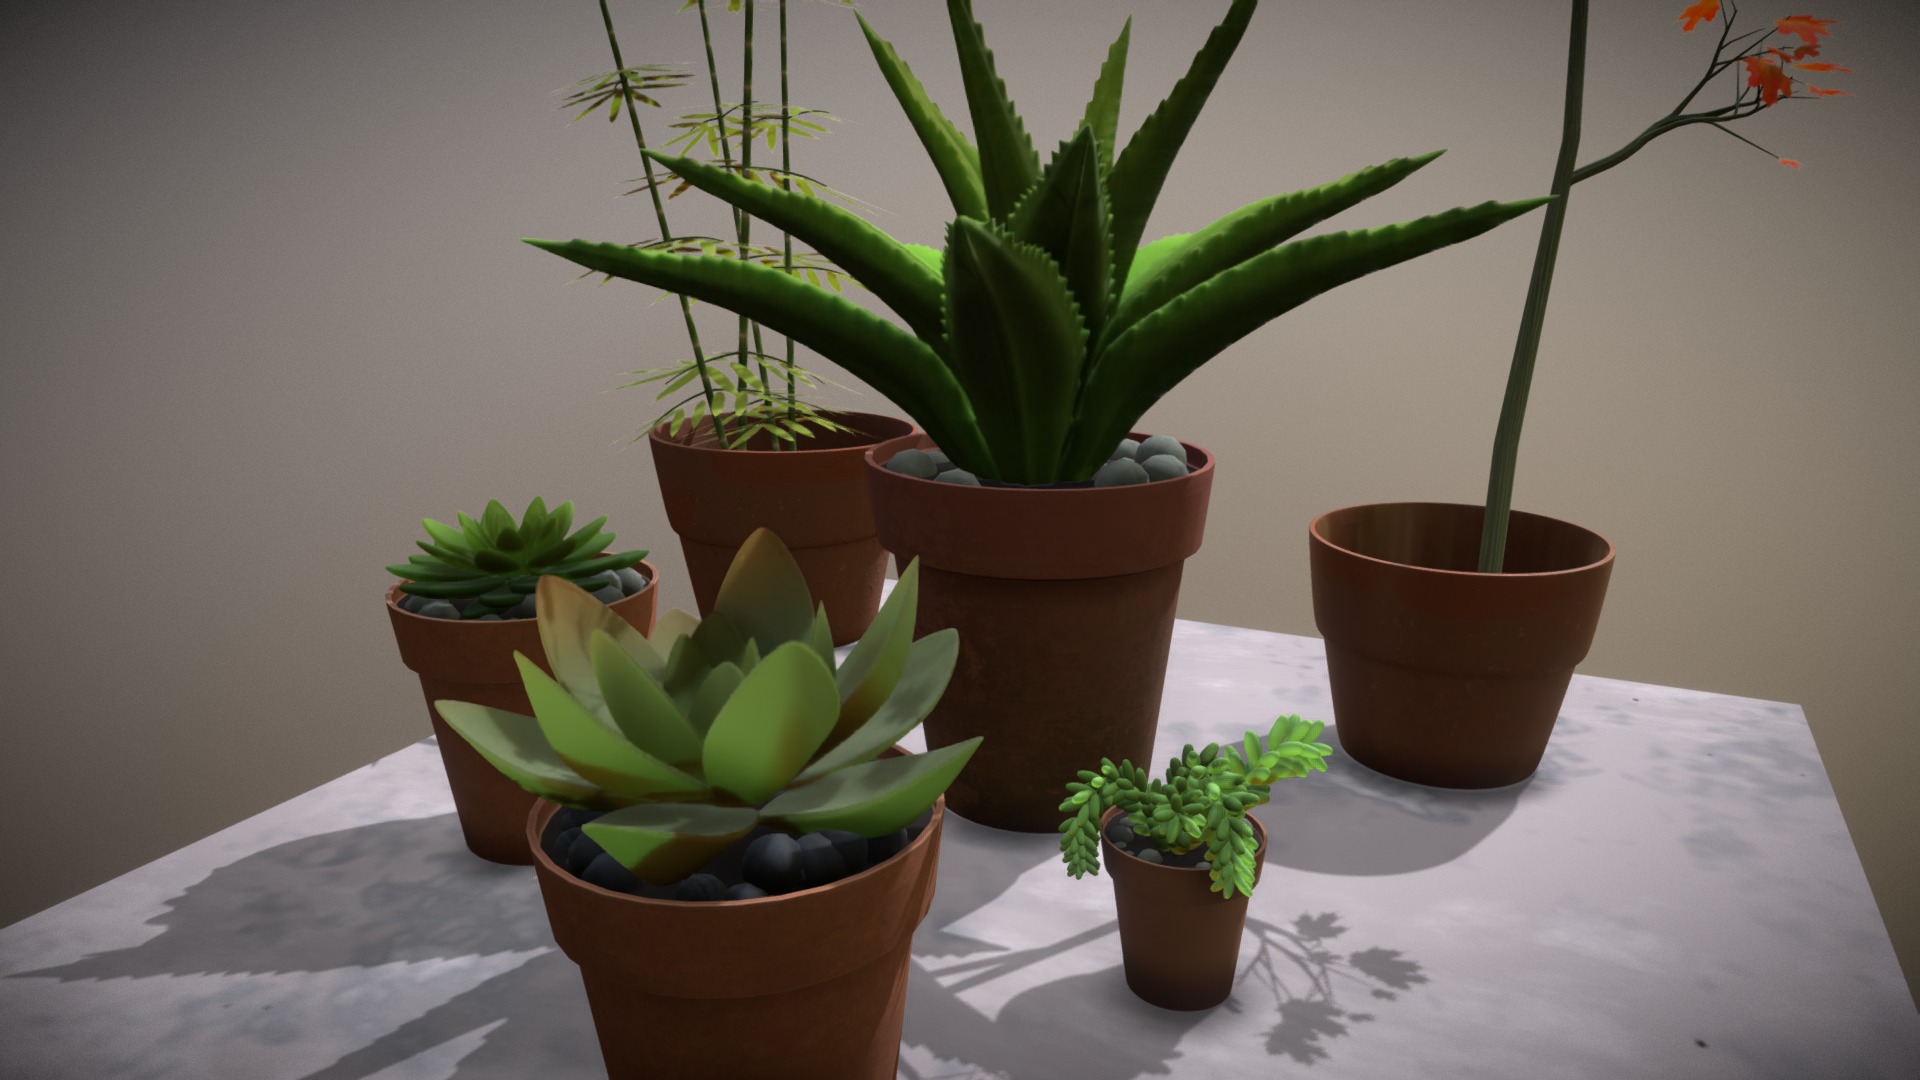 3D model Succulent Plants Obj - This is a 3D model of the Succulent Plants Obj. The 3D model is about a group of potted plants.